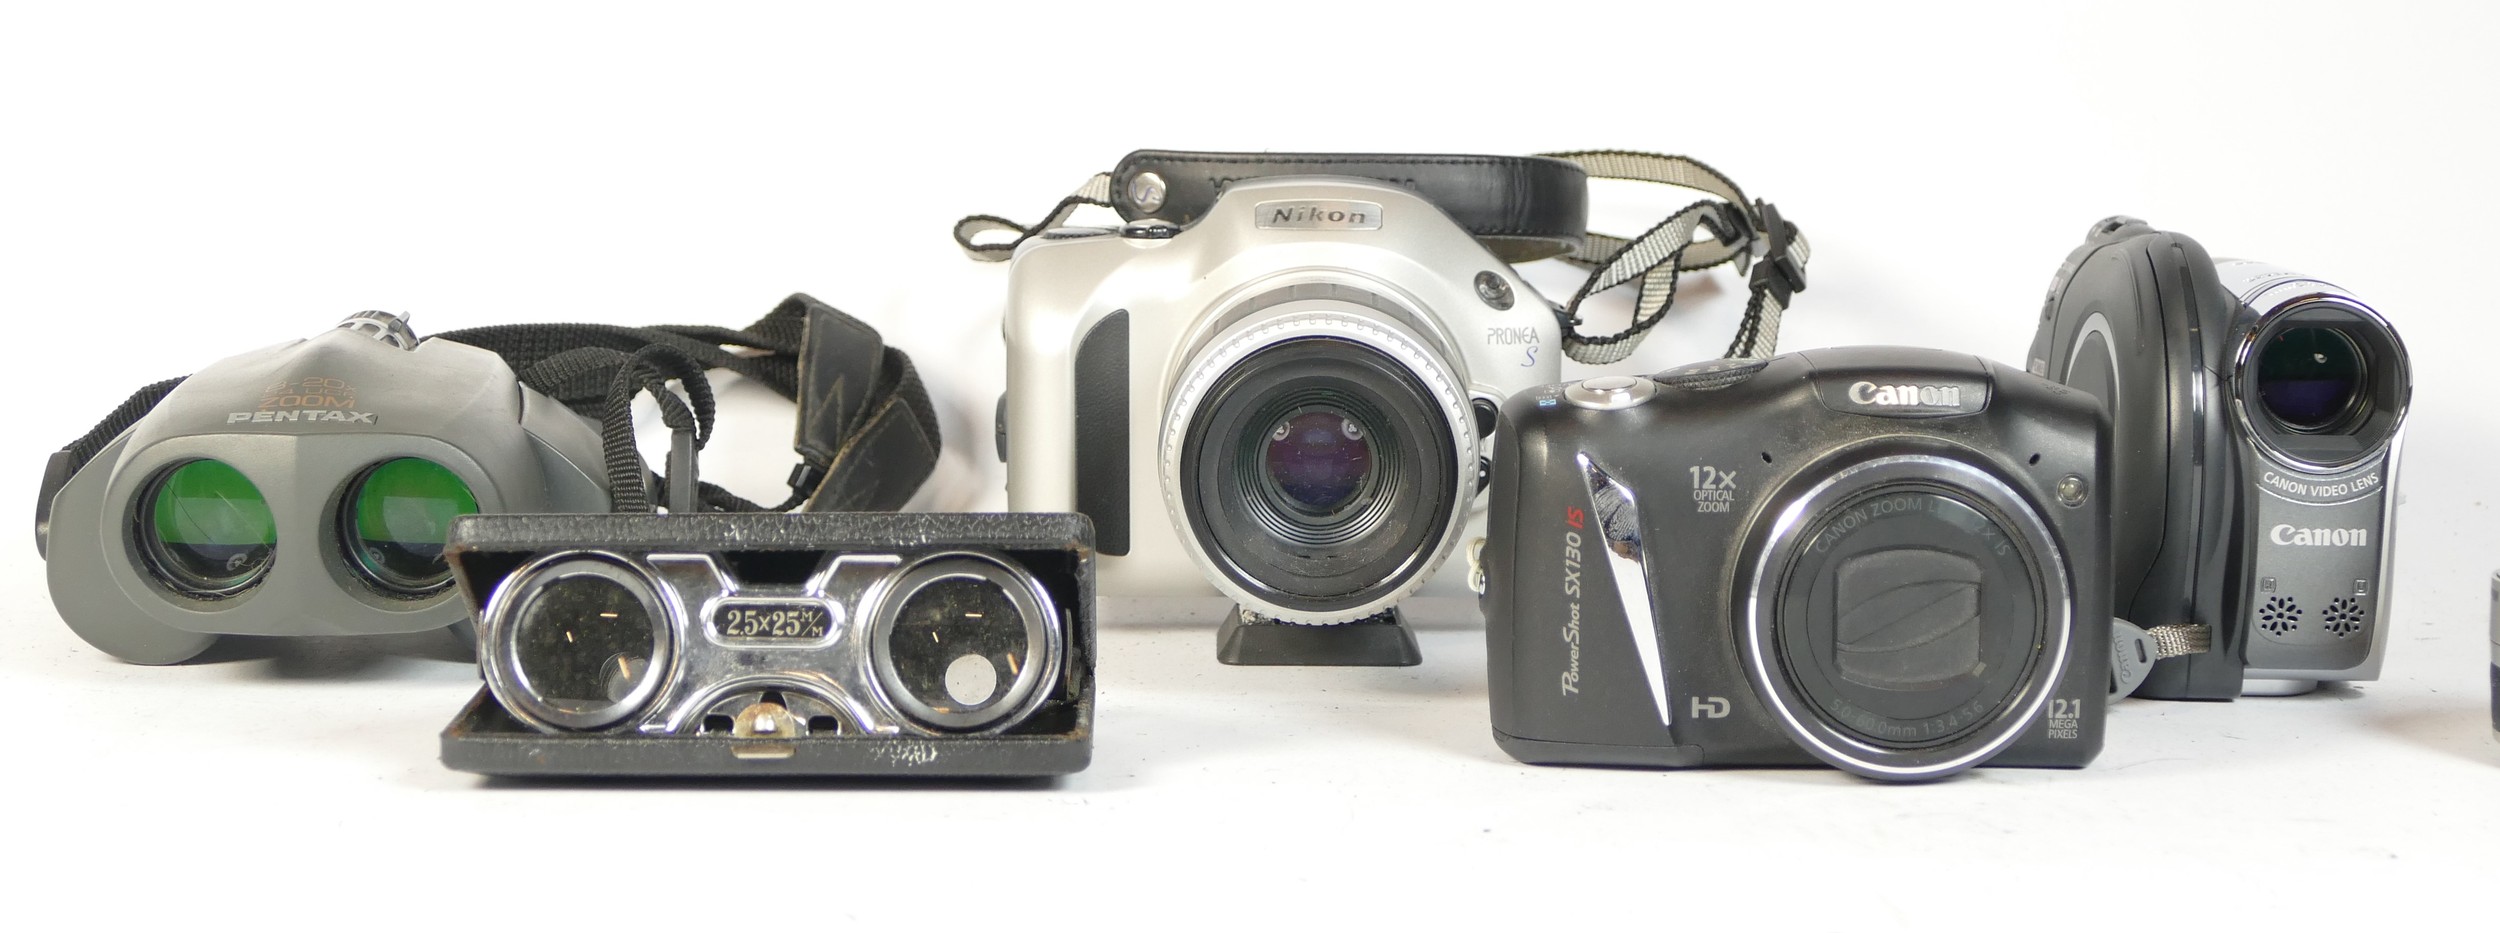 A collection of cameras and equipment, to include a Canon Powershot SX130, a Nikon Pronea S, a Canon - Bild 2 aus 2